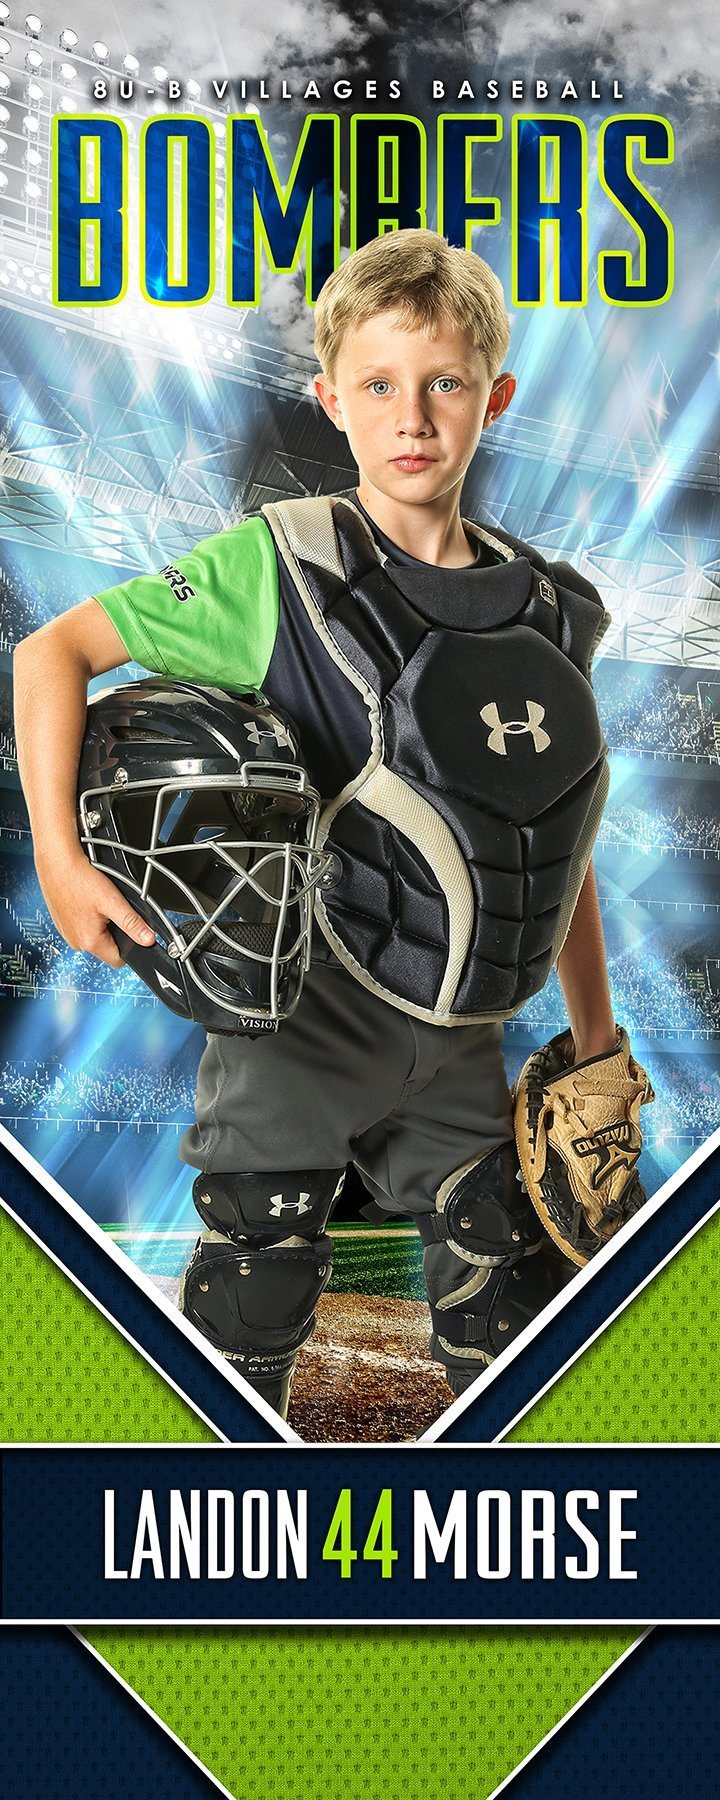 01 - Full Set - X-Factor - Baseball / Softball Collection-Photoshop Template - PSMGraphix